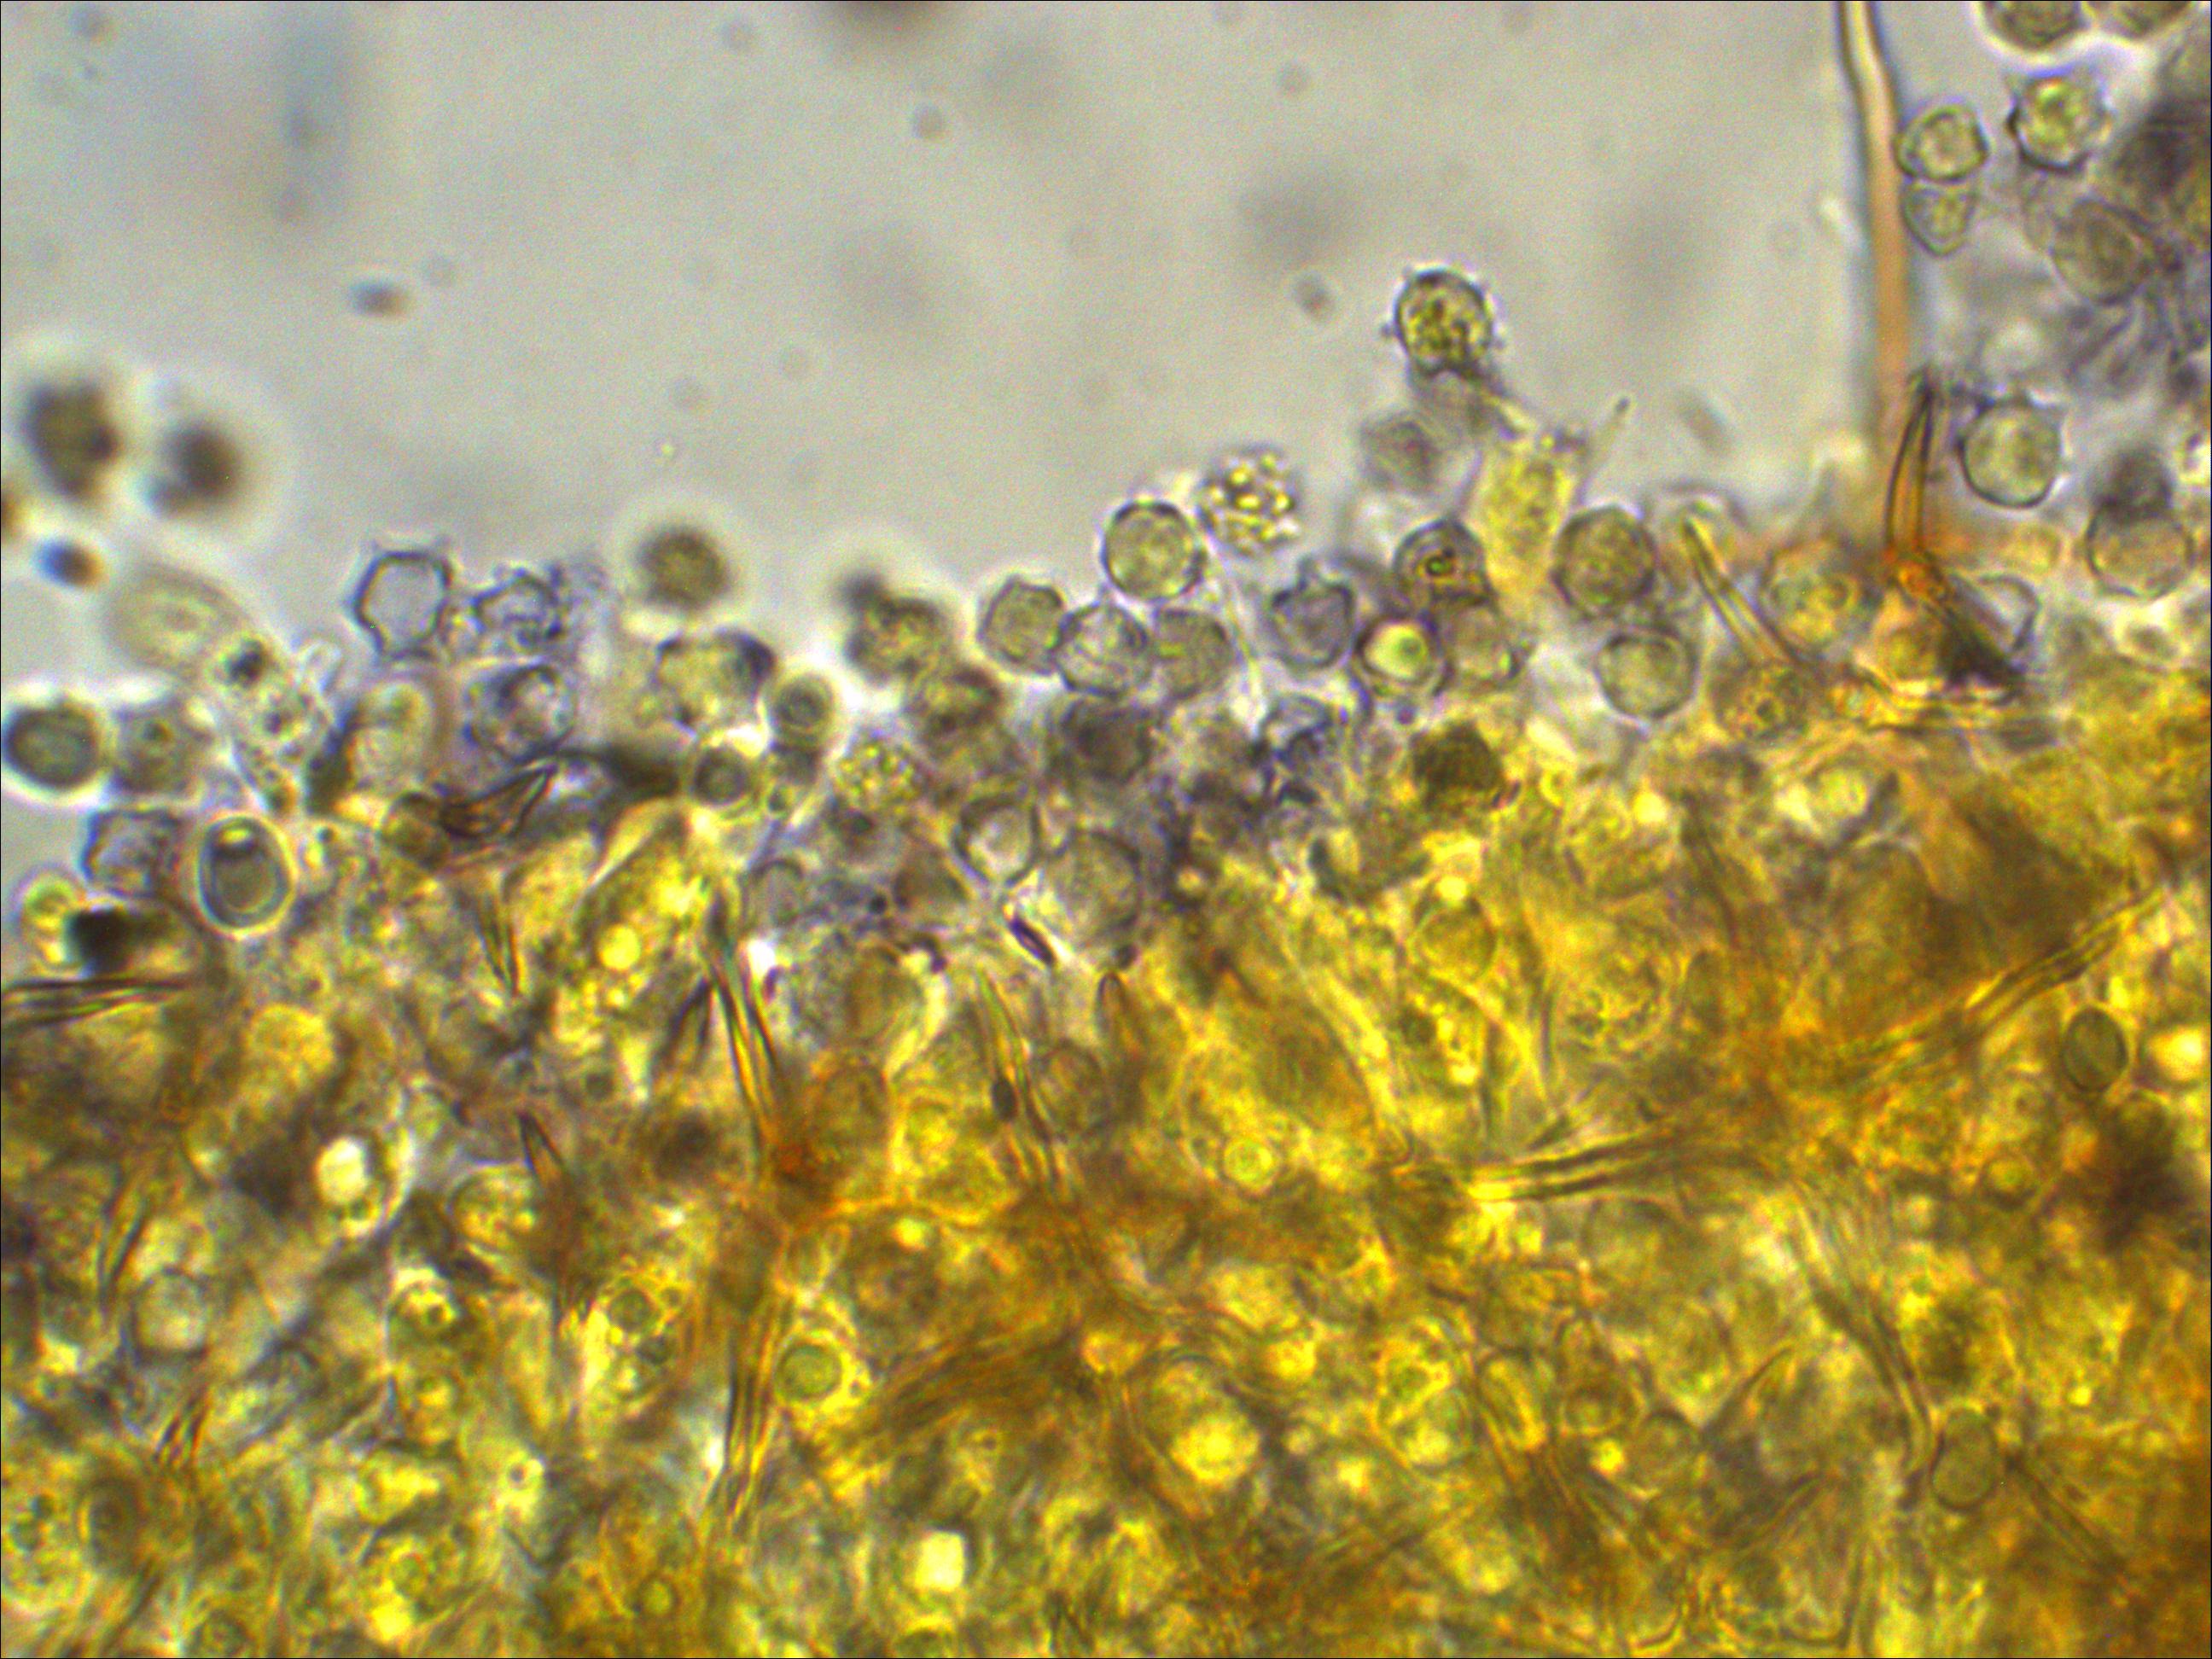 Asterostroma cervicolor ochroleucum medium Rindenpilz Asterosetae Sporen amyloid ornamentiert Mikroskopie